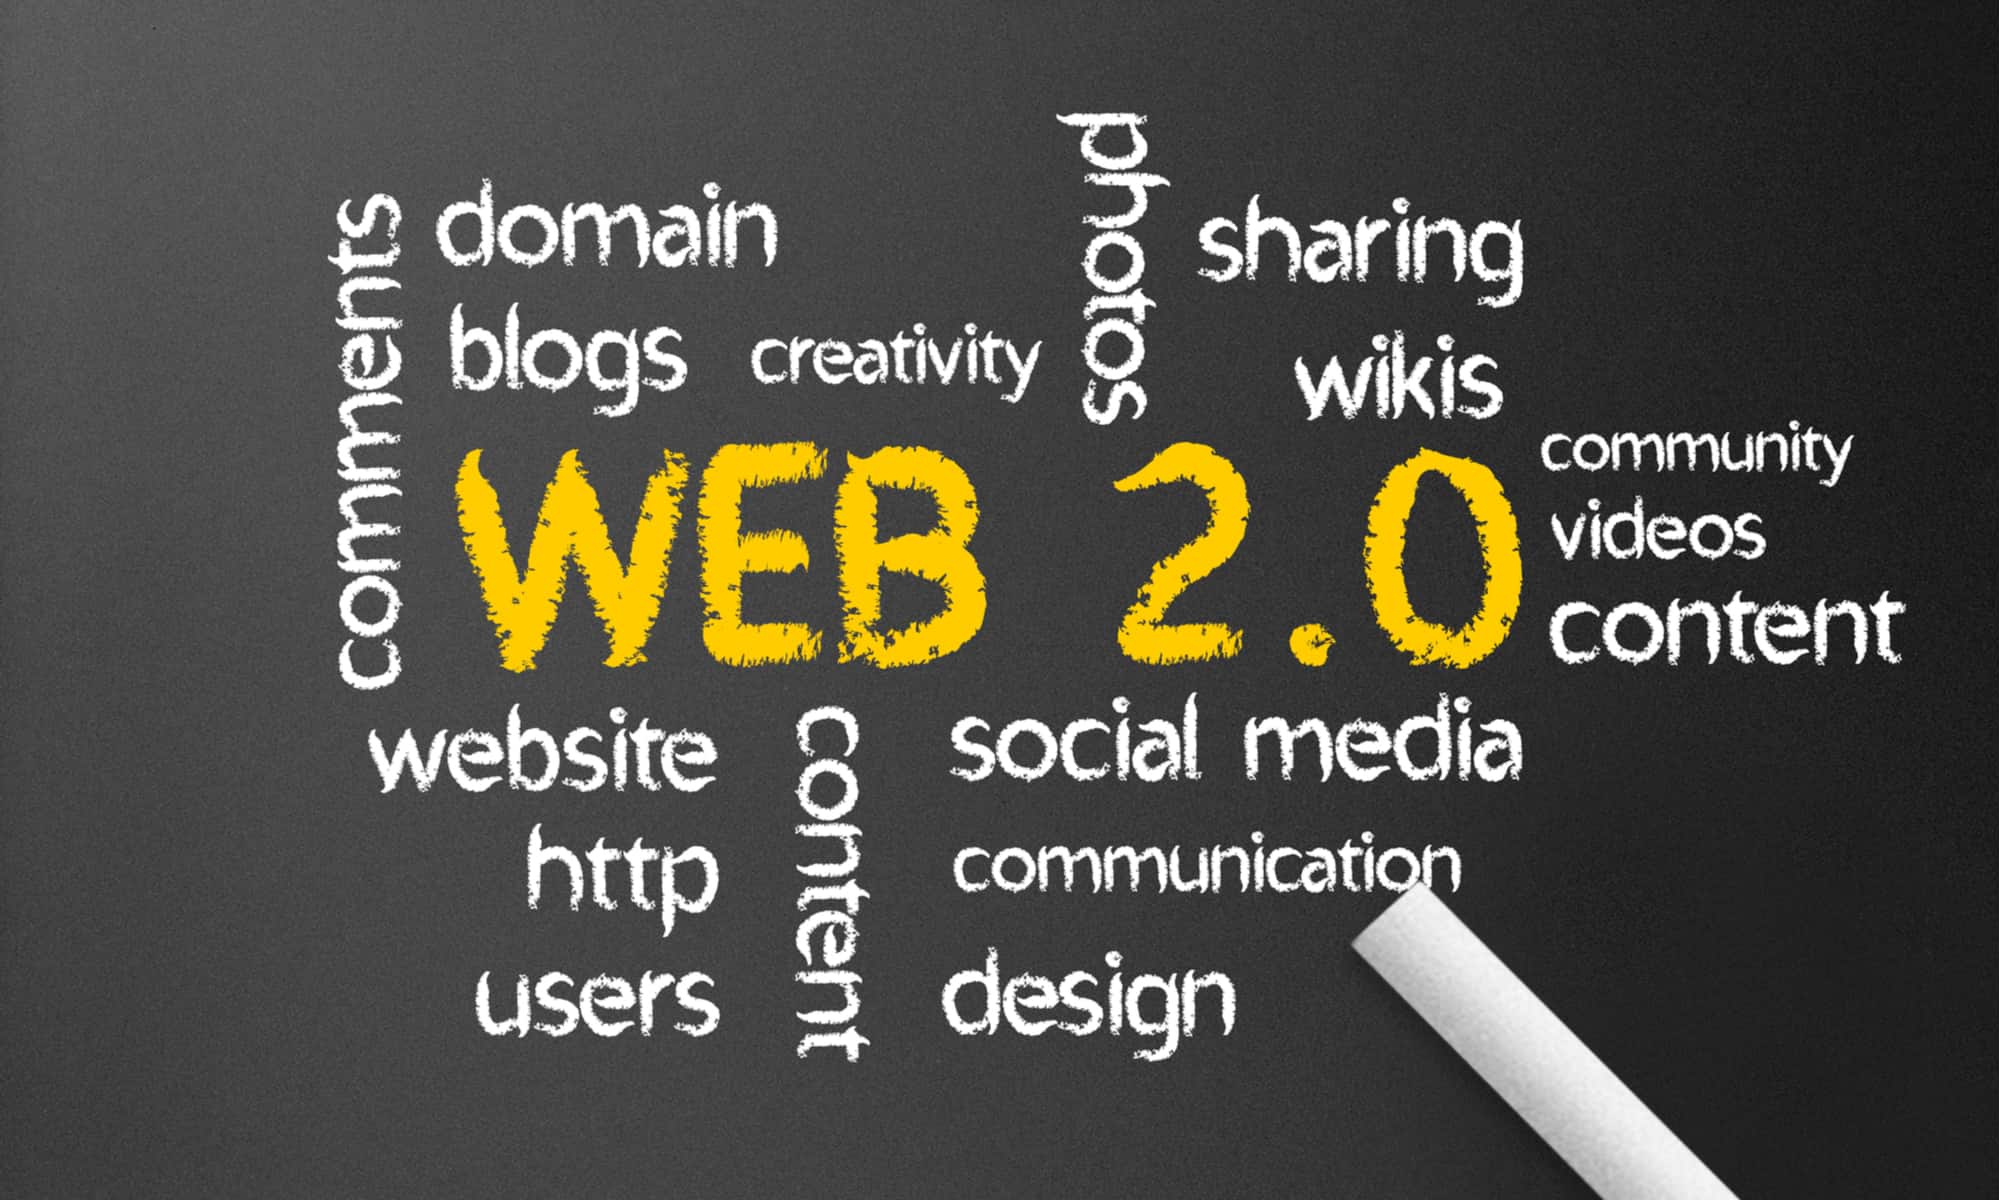 web 2 0 introduction